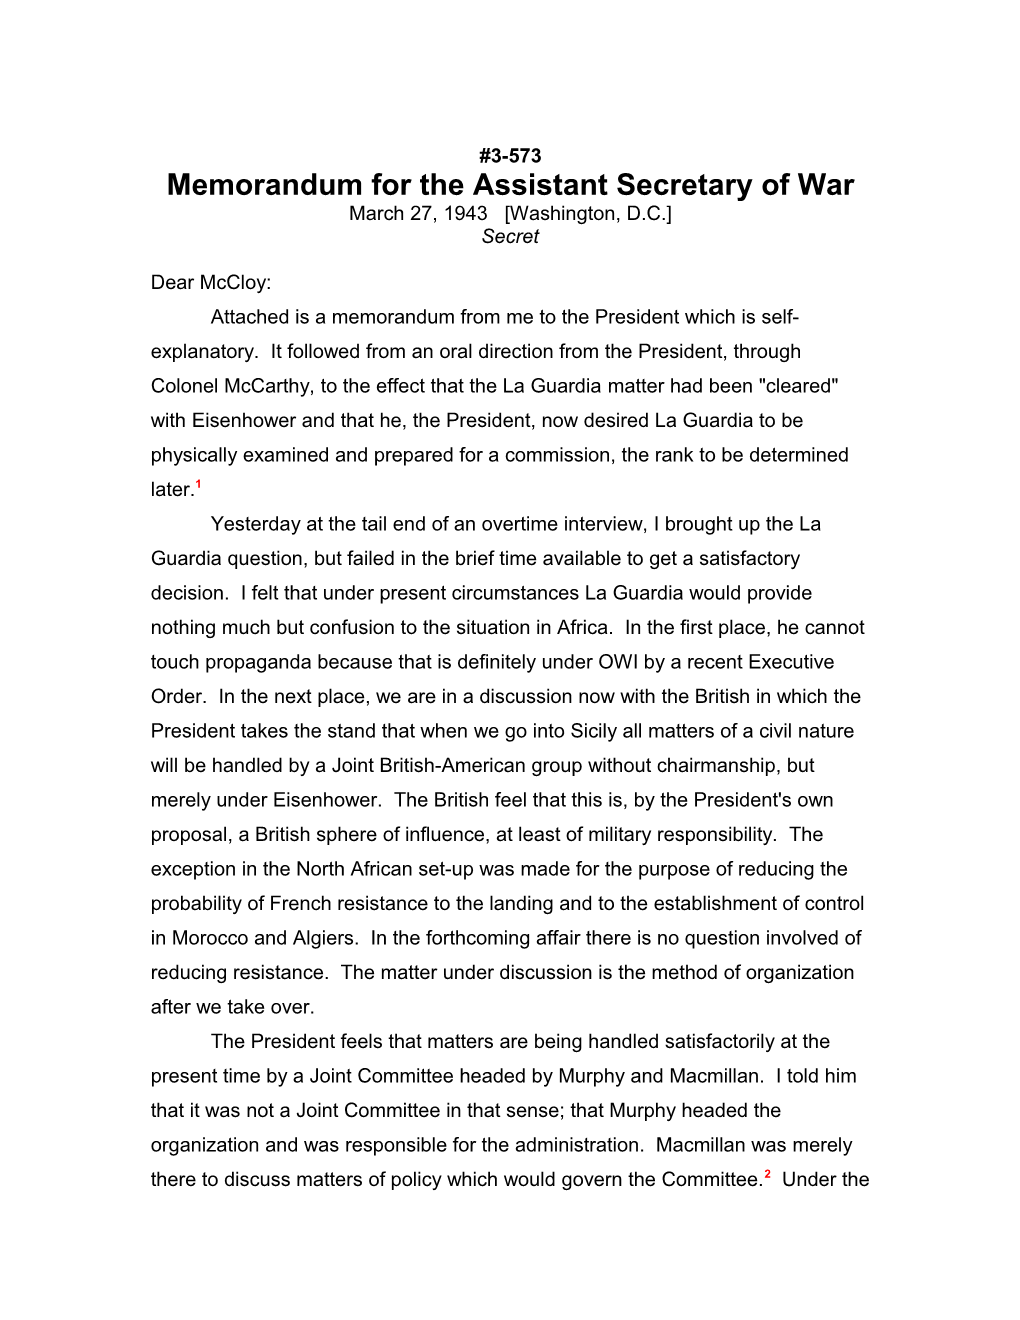 Memorandum for the Assistant Secretary of War